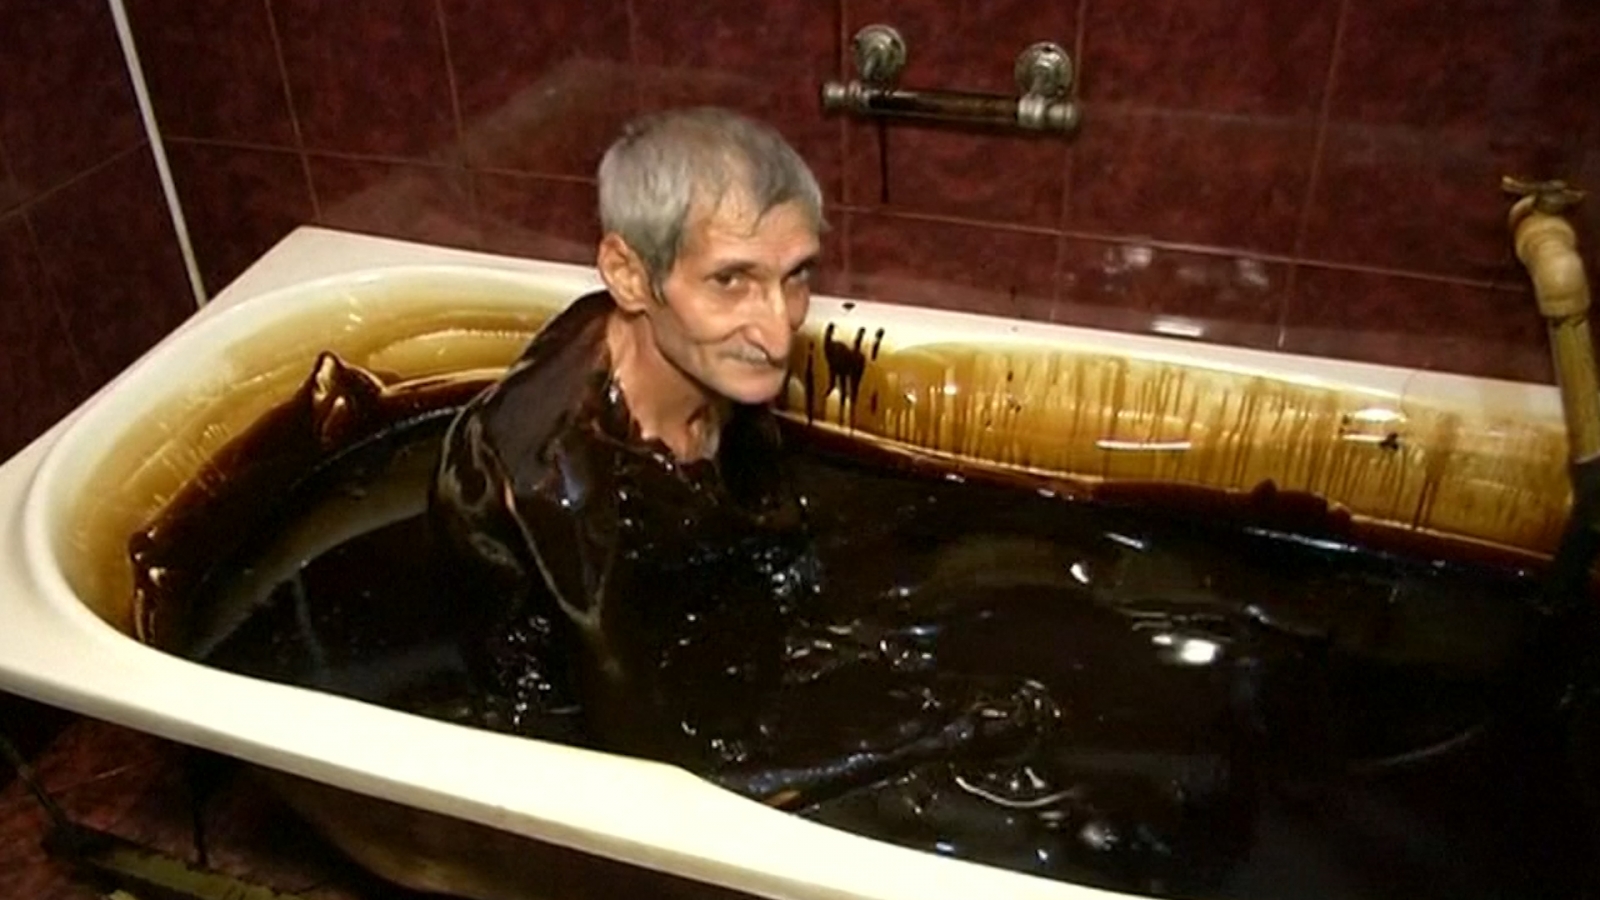 Azerbaijan Luxury Spa Lets Its Customers Take A Bath In